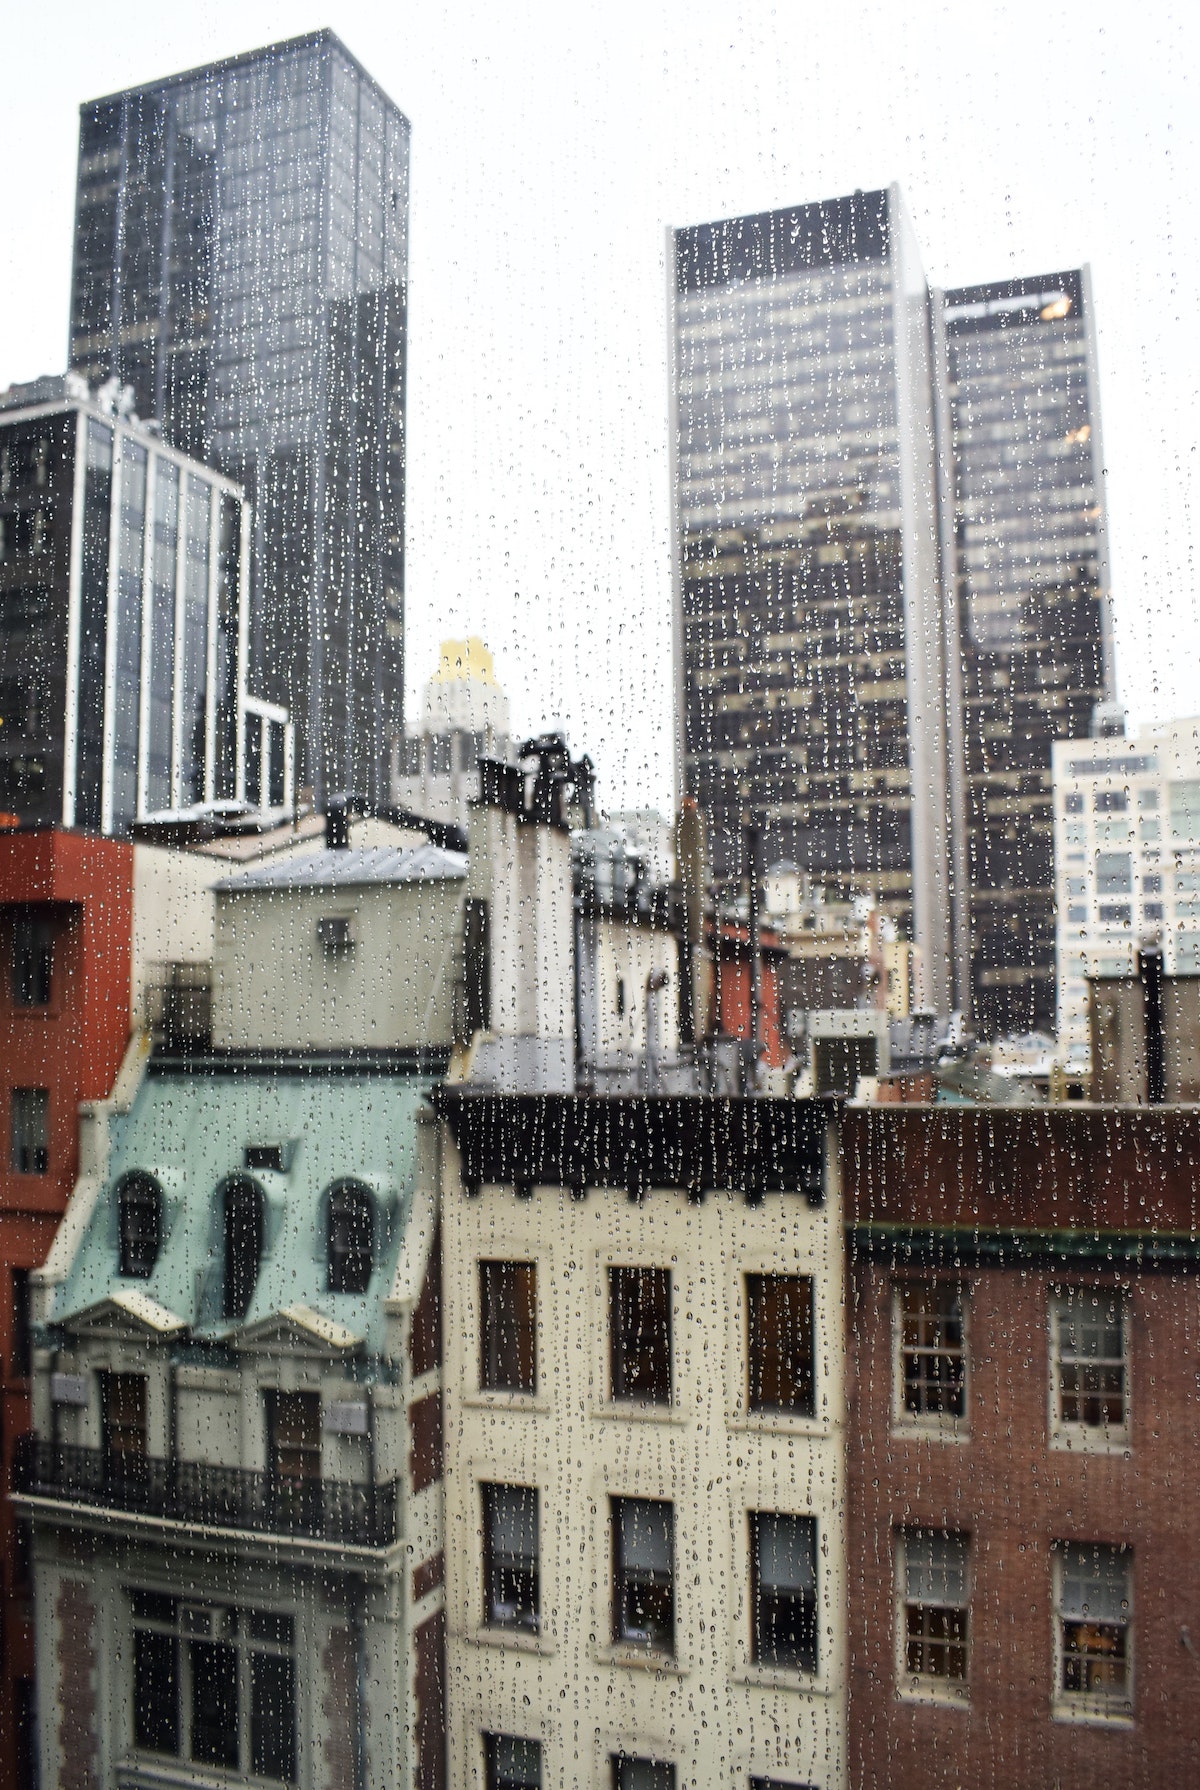 Photo of the city through a rainy window